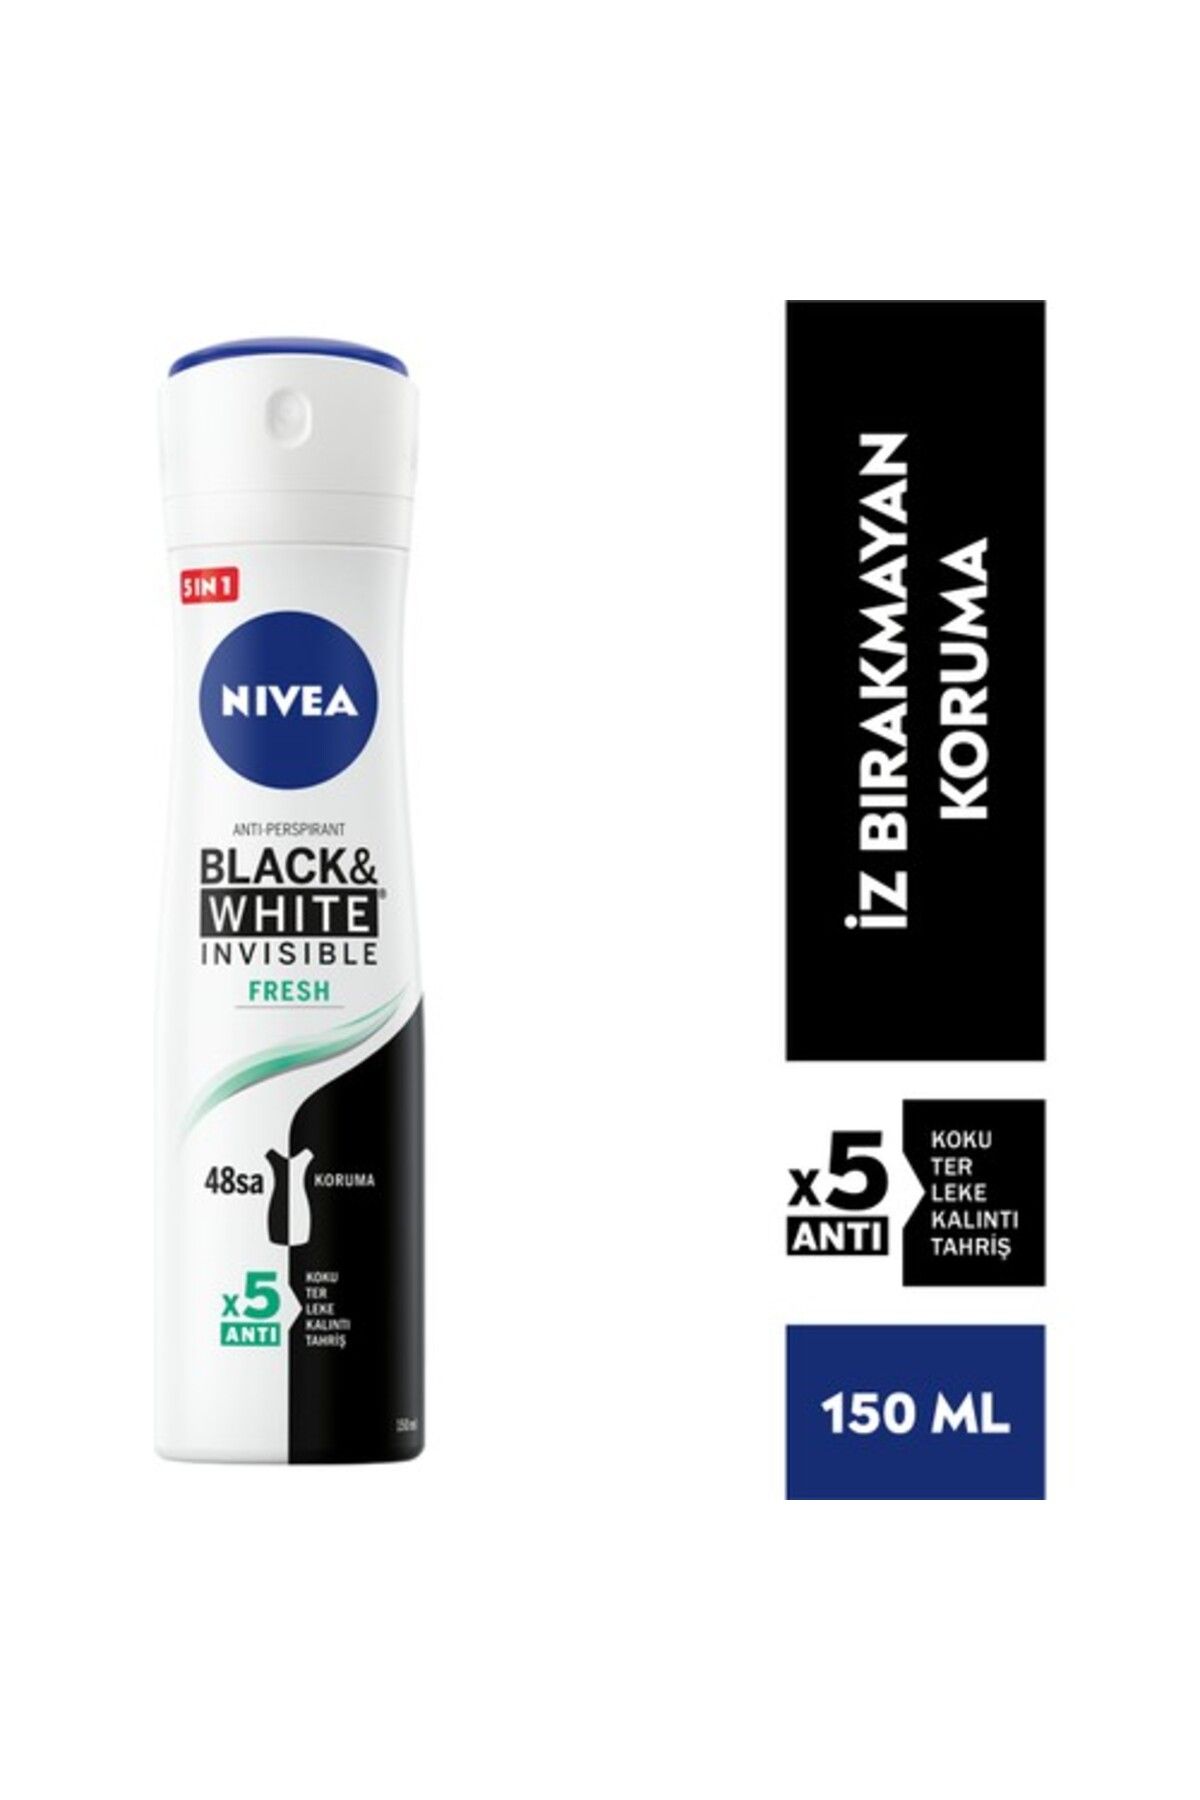 NIVEA Kadın Sprey Deodorant Black&white Fresh Invisible 150ml,48 Saat Anti-perspirant Koruma